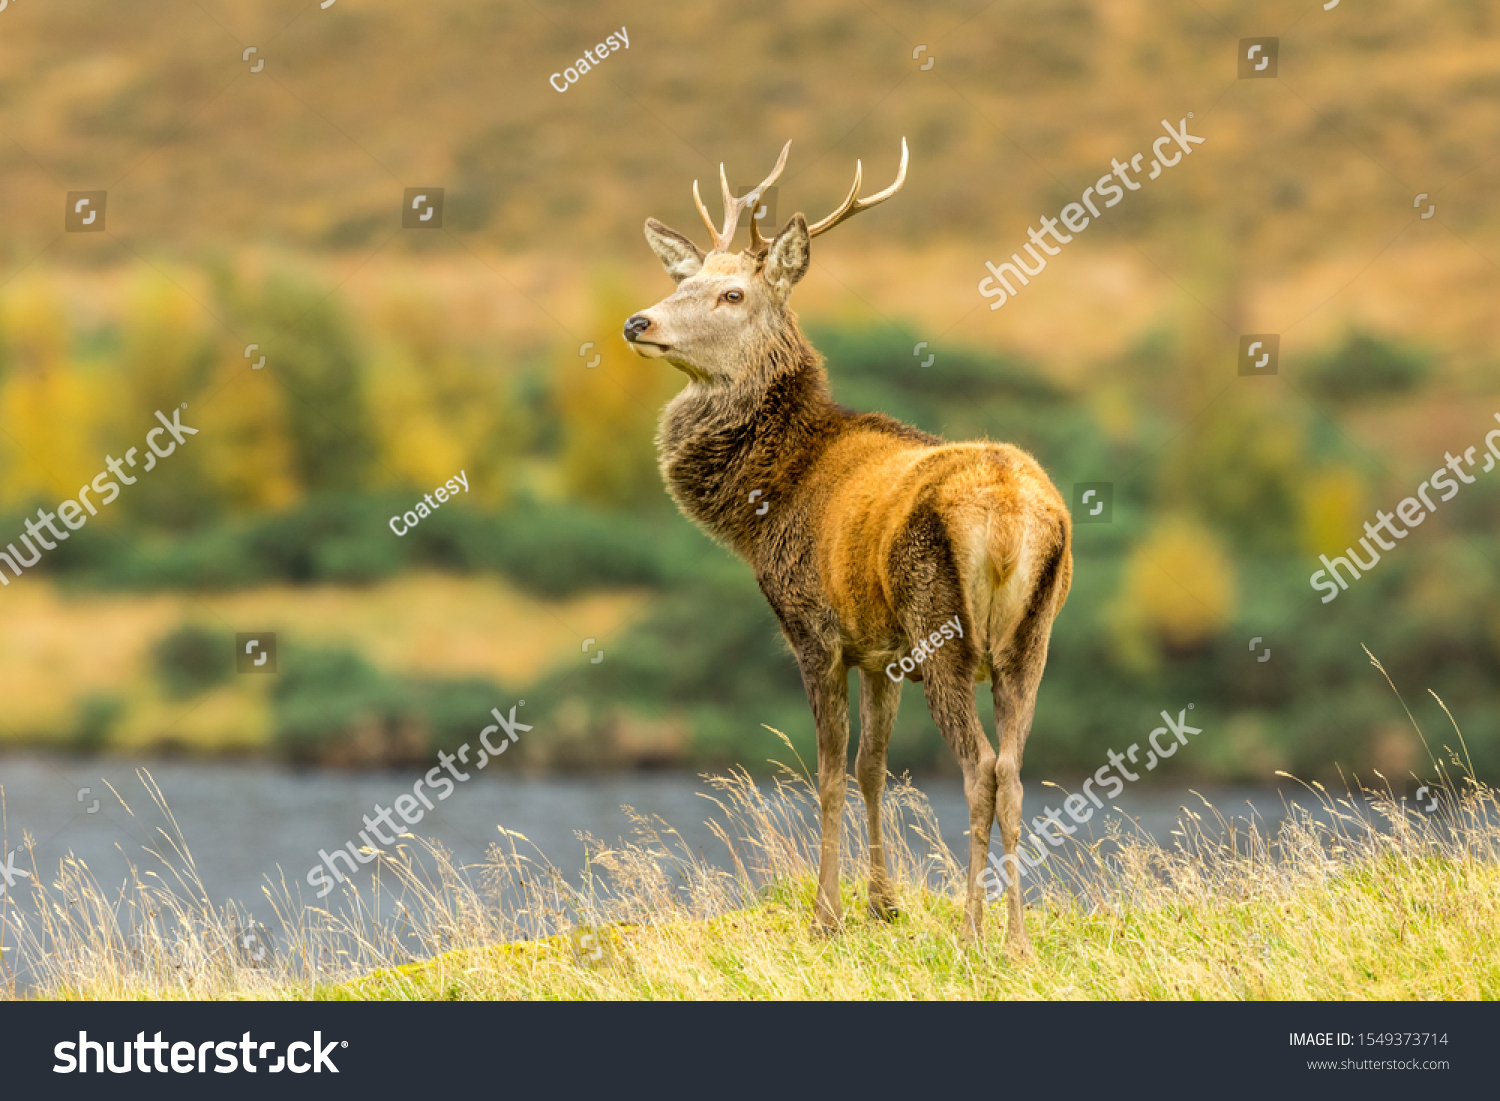 young deer name